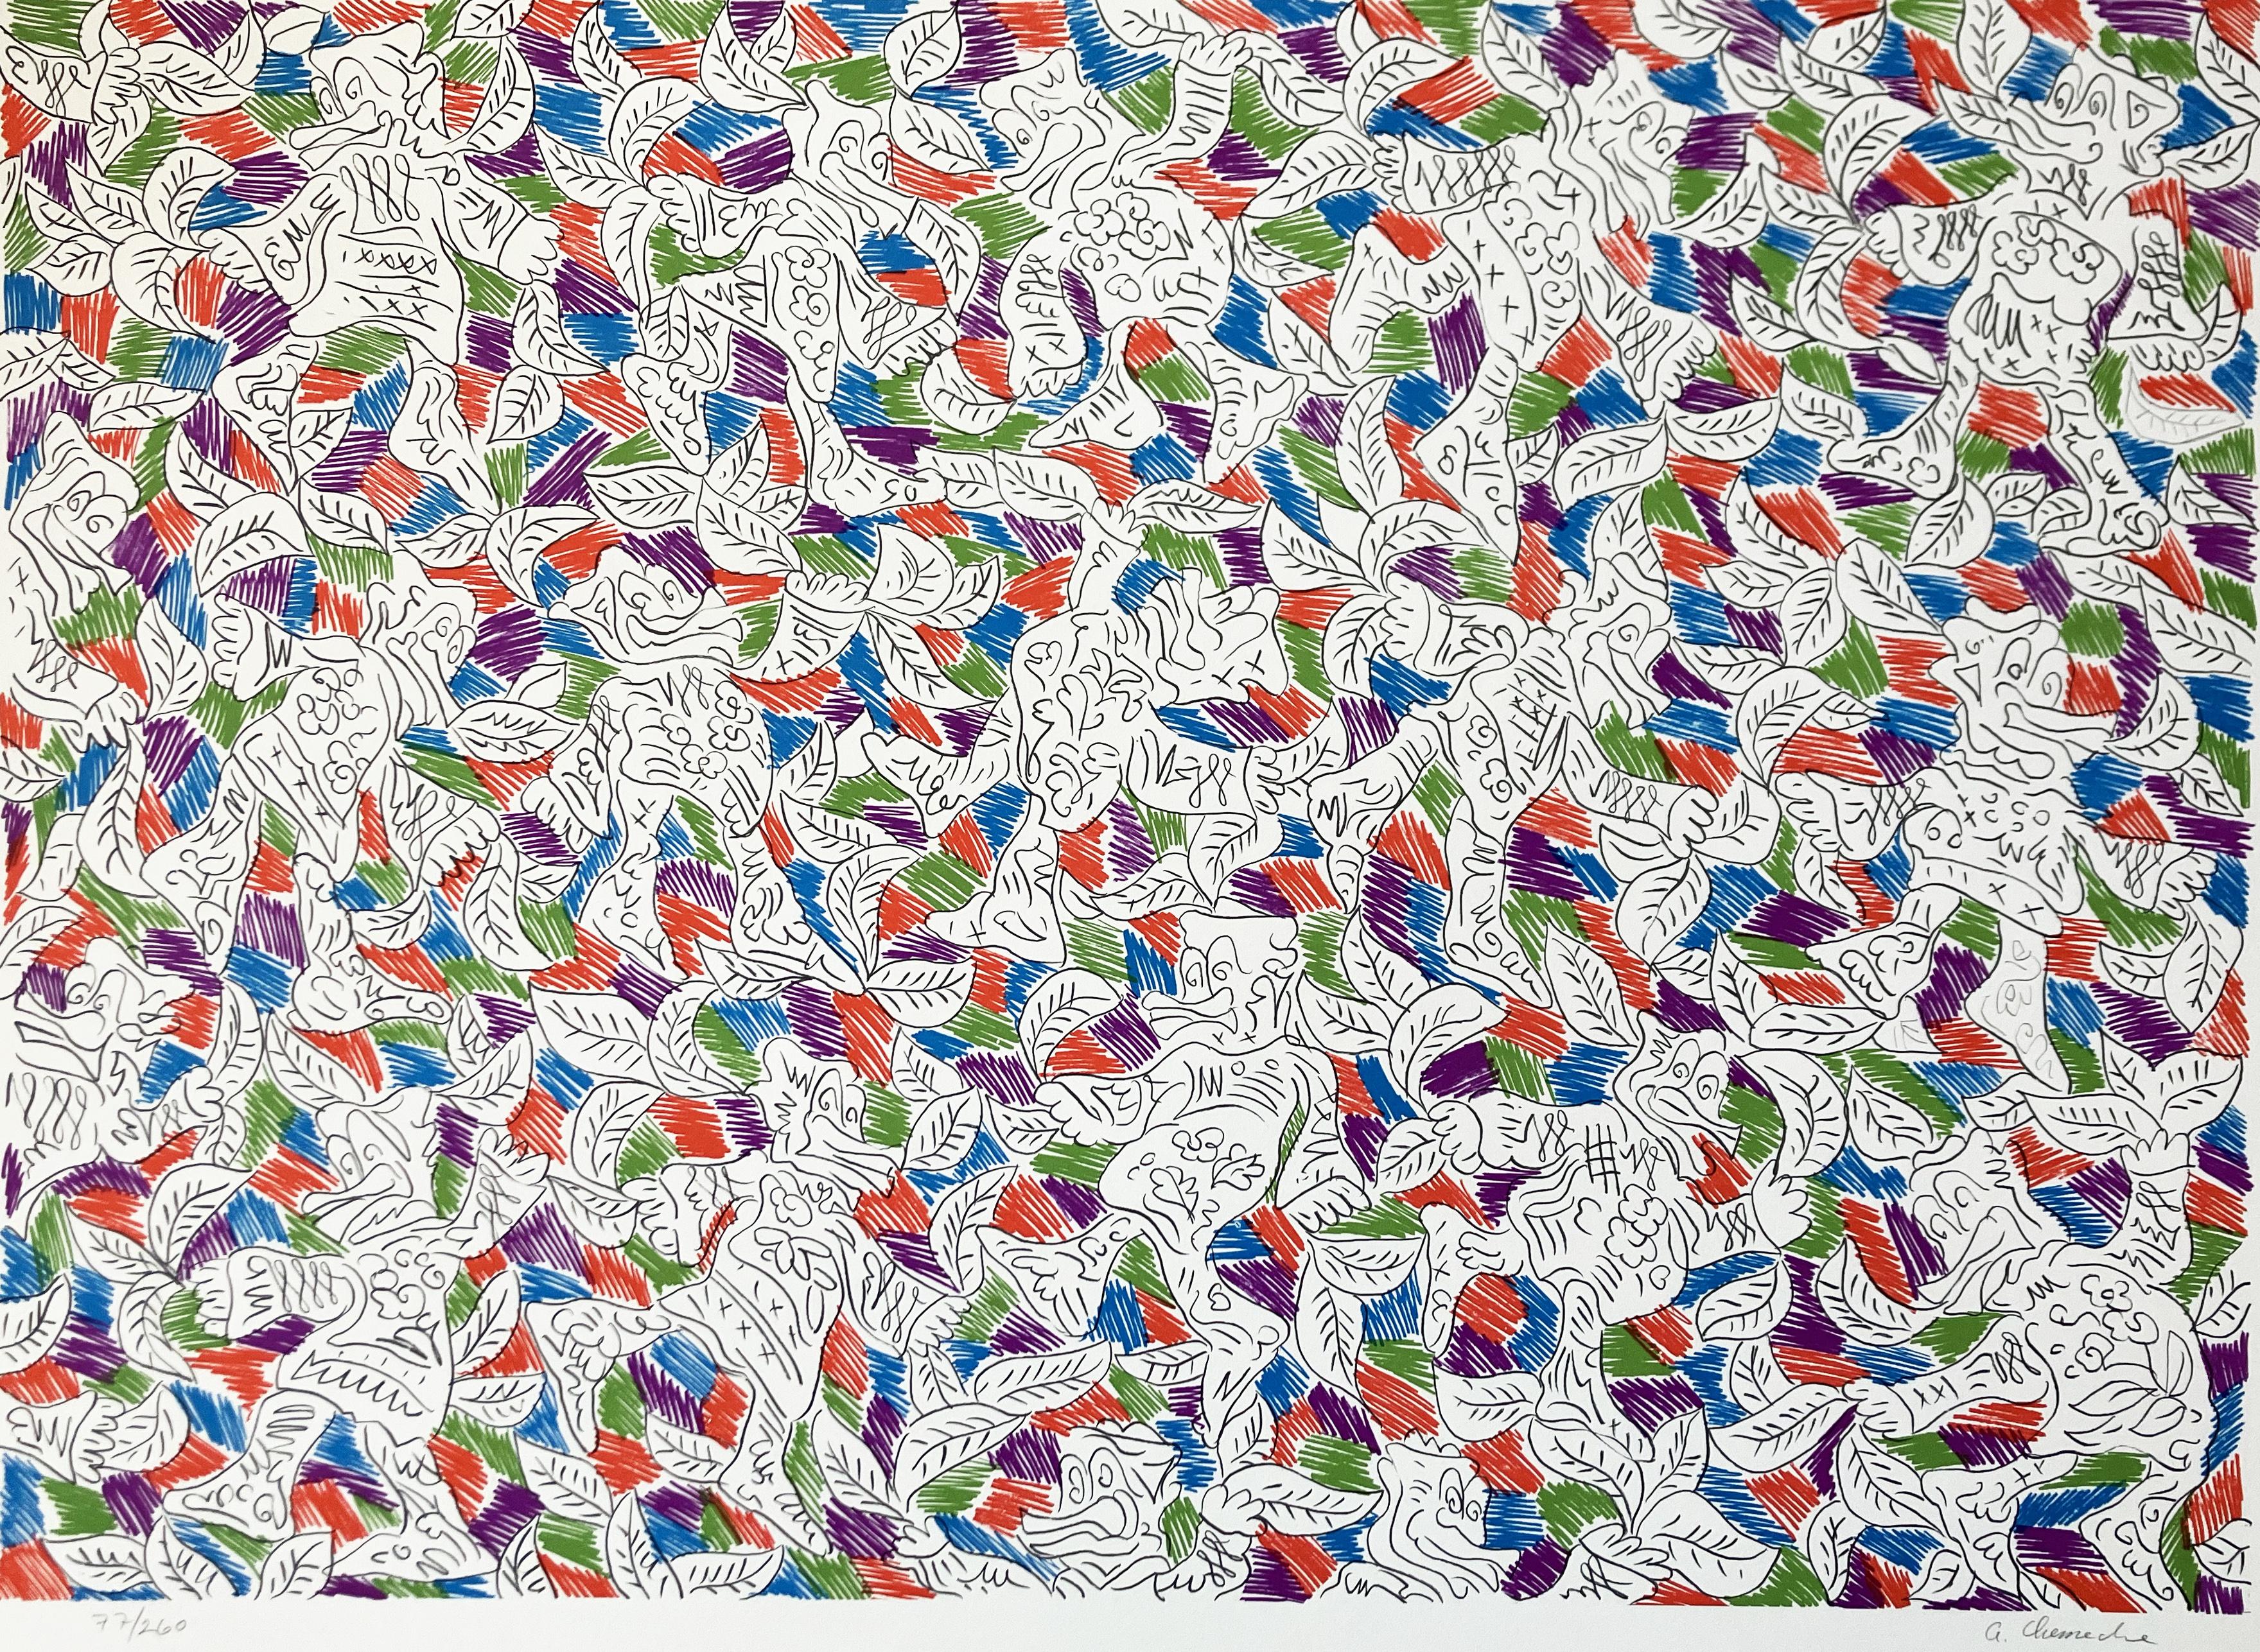 Dancing Ducks in Red, Green, Blue, Purple - Print by George Chemeche